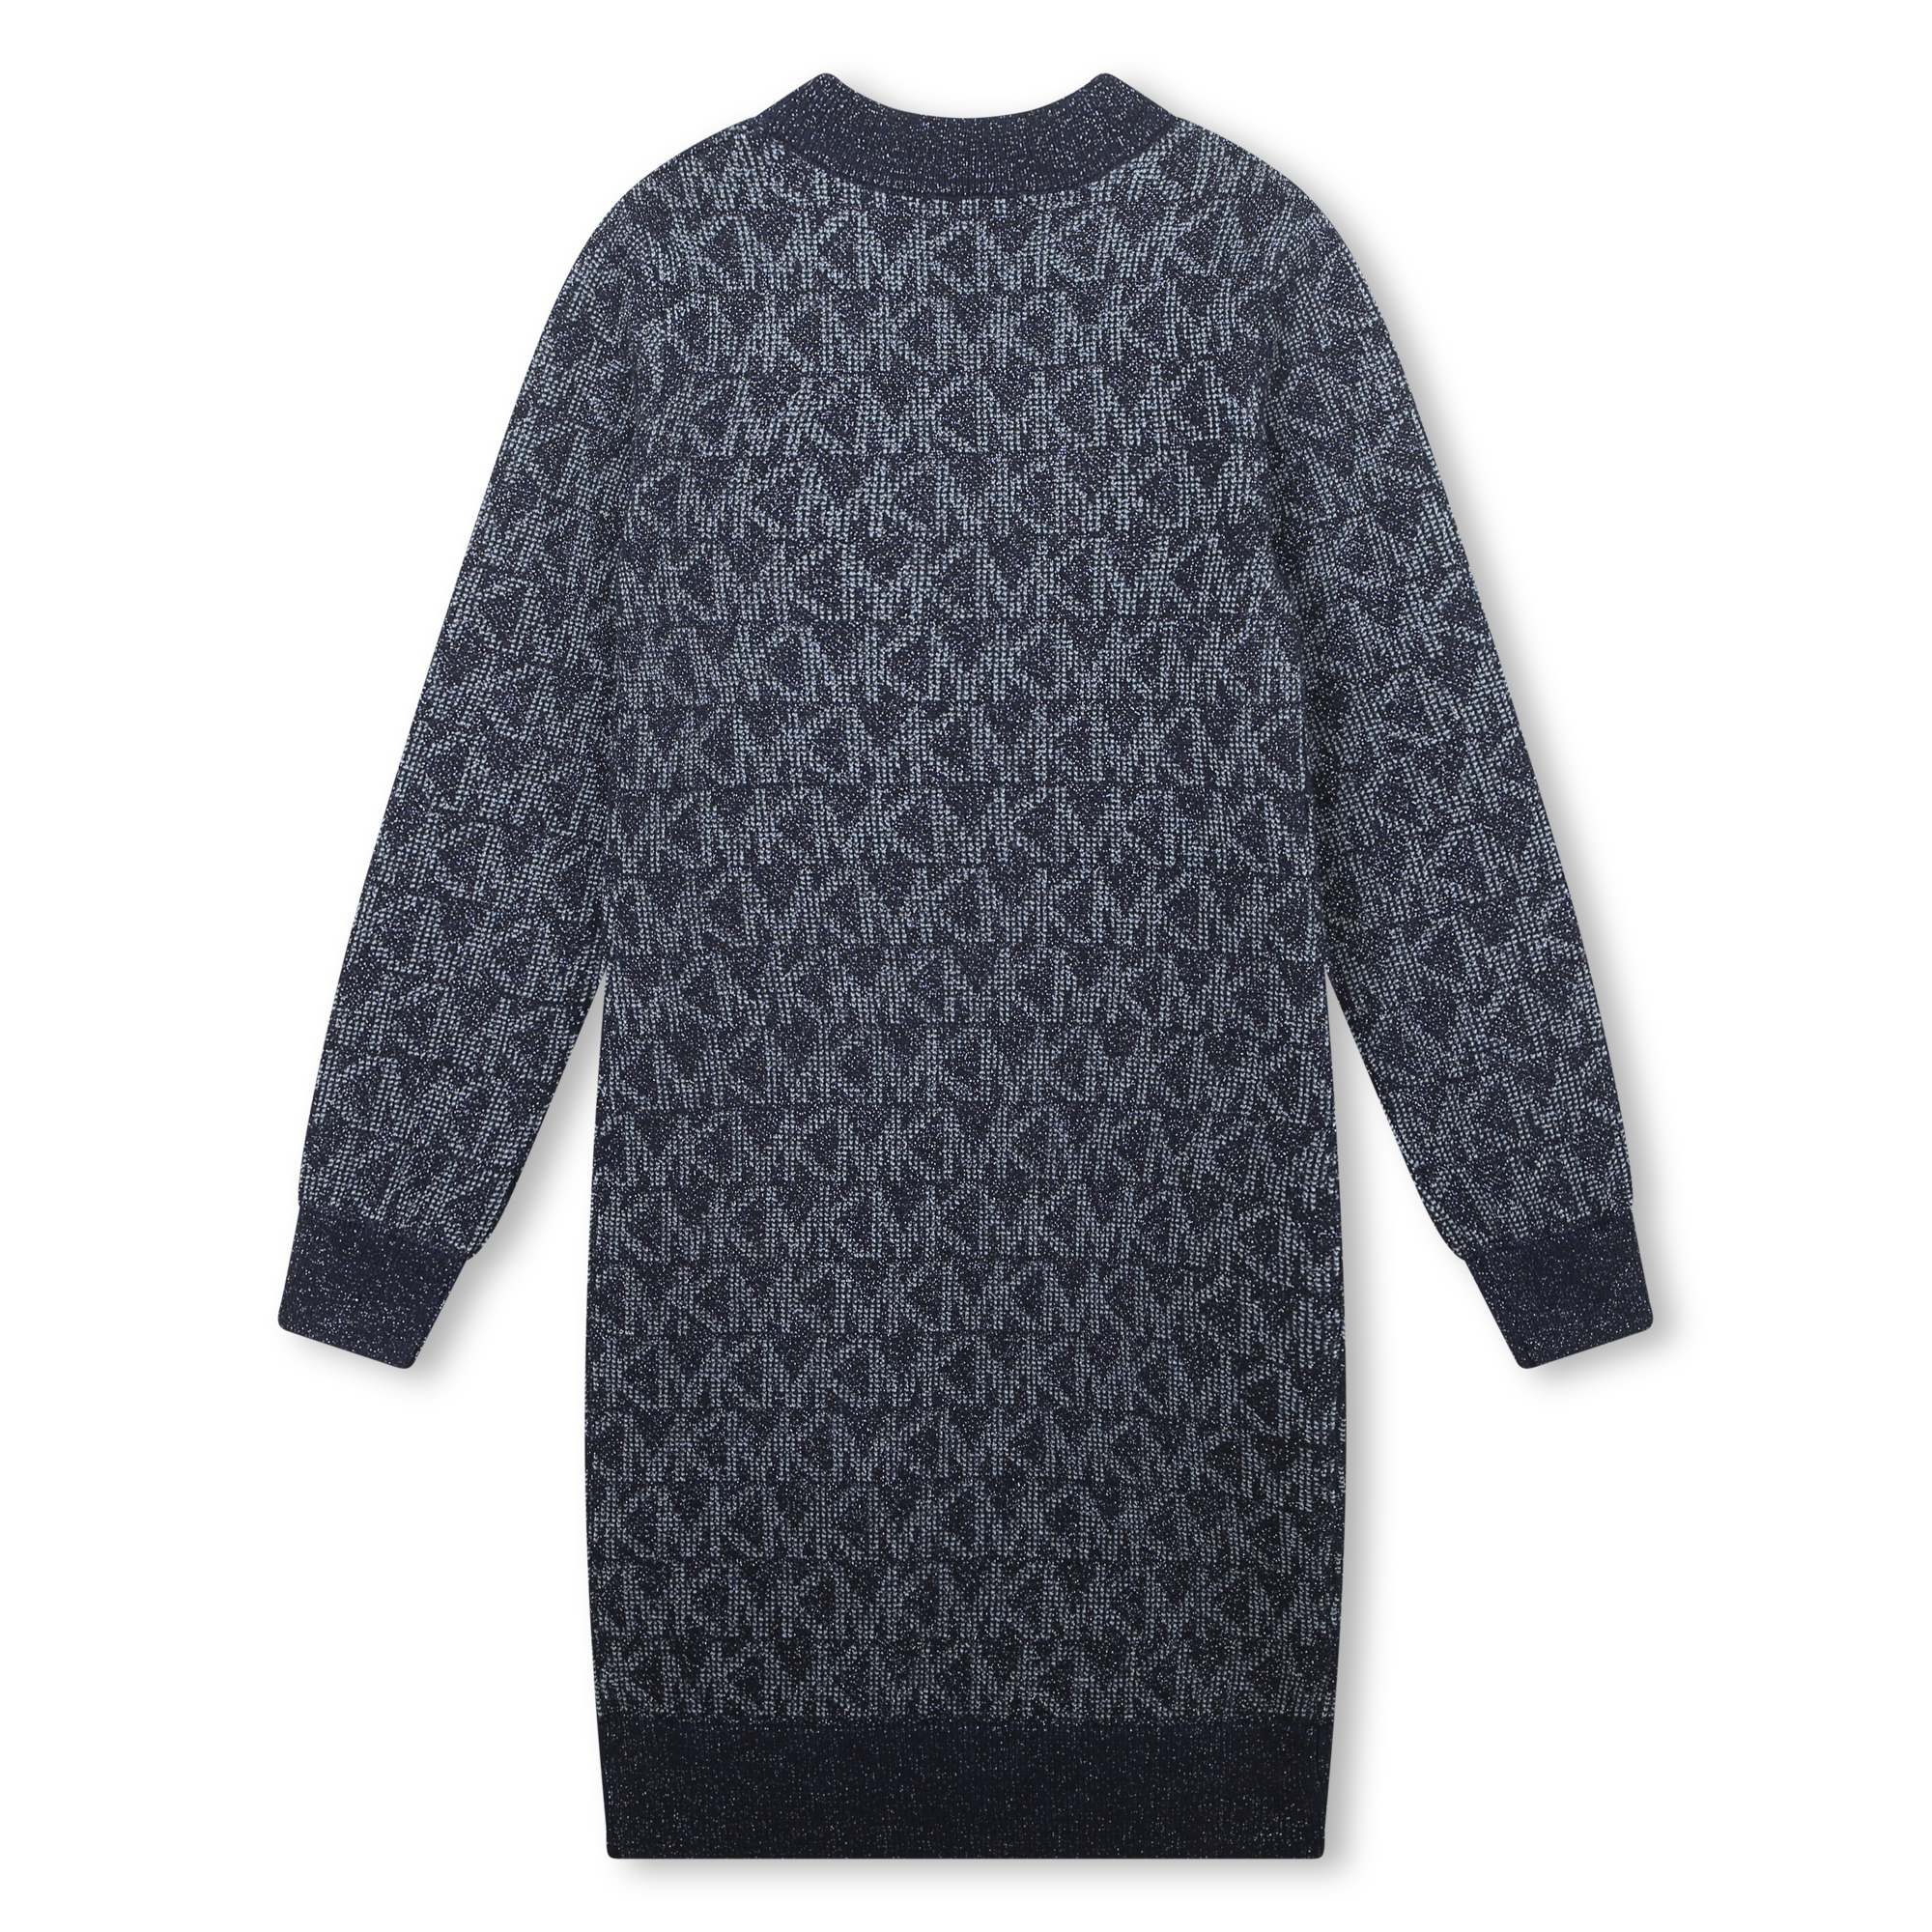 Michael Kors Knitting Dress Style: R12164